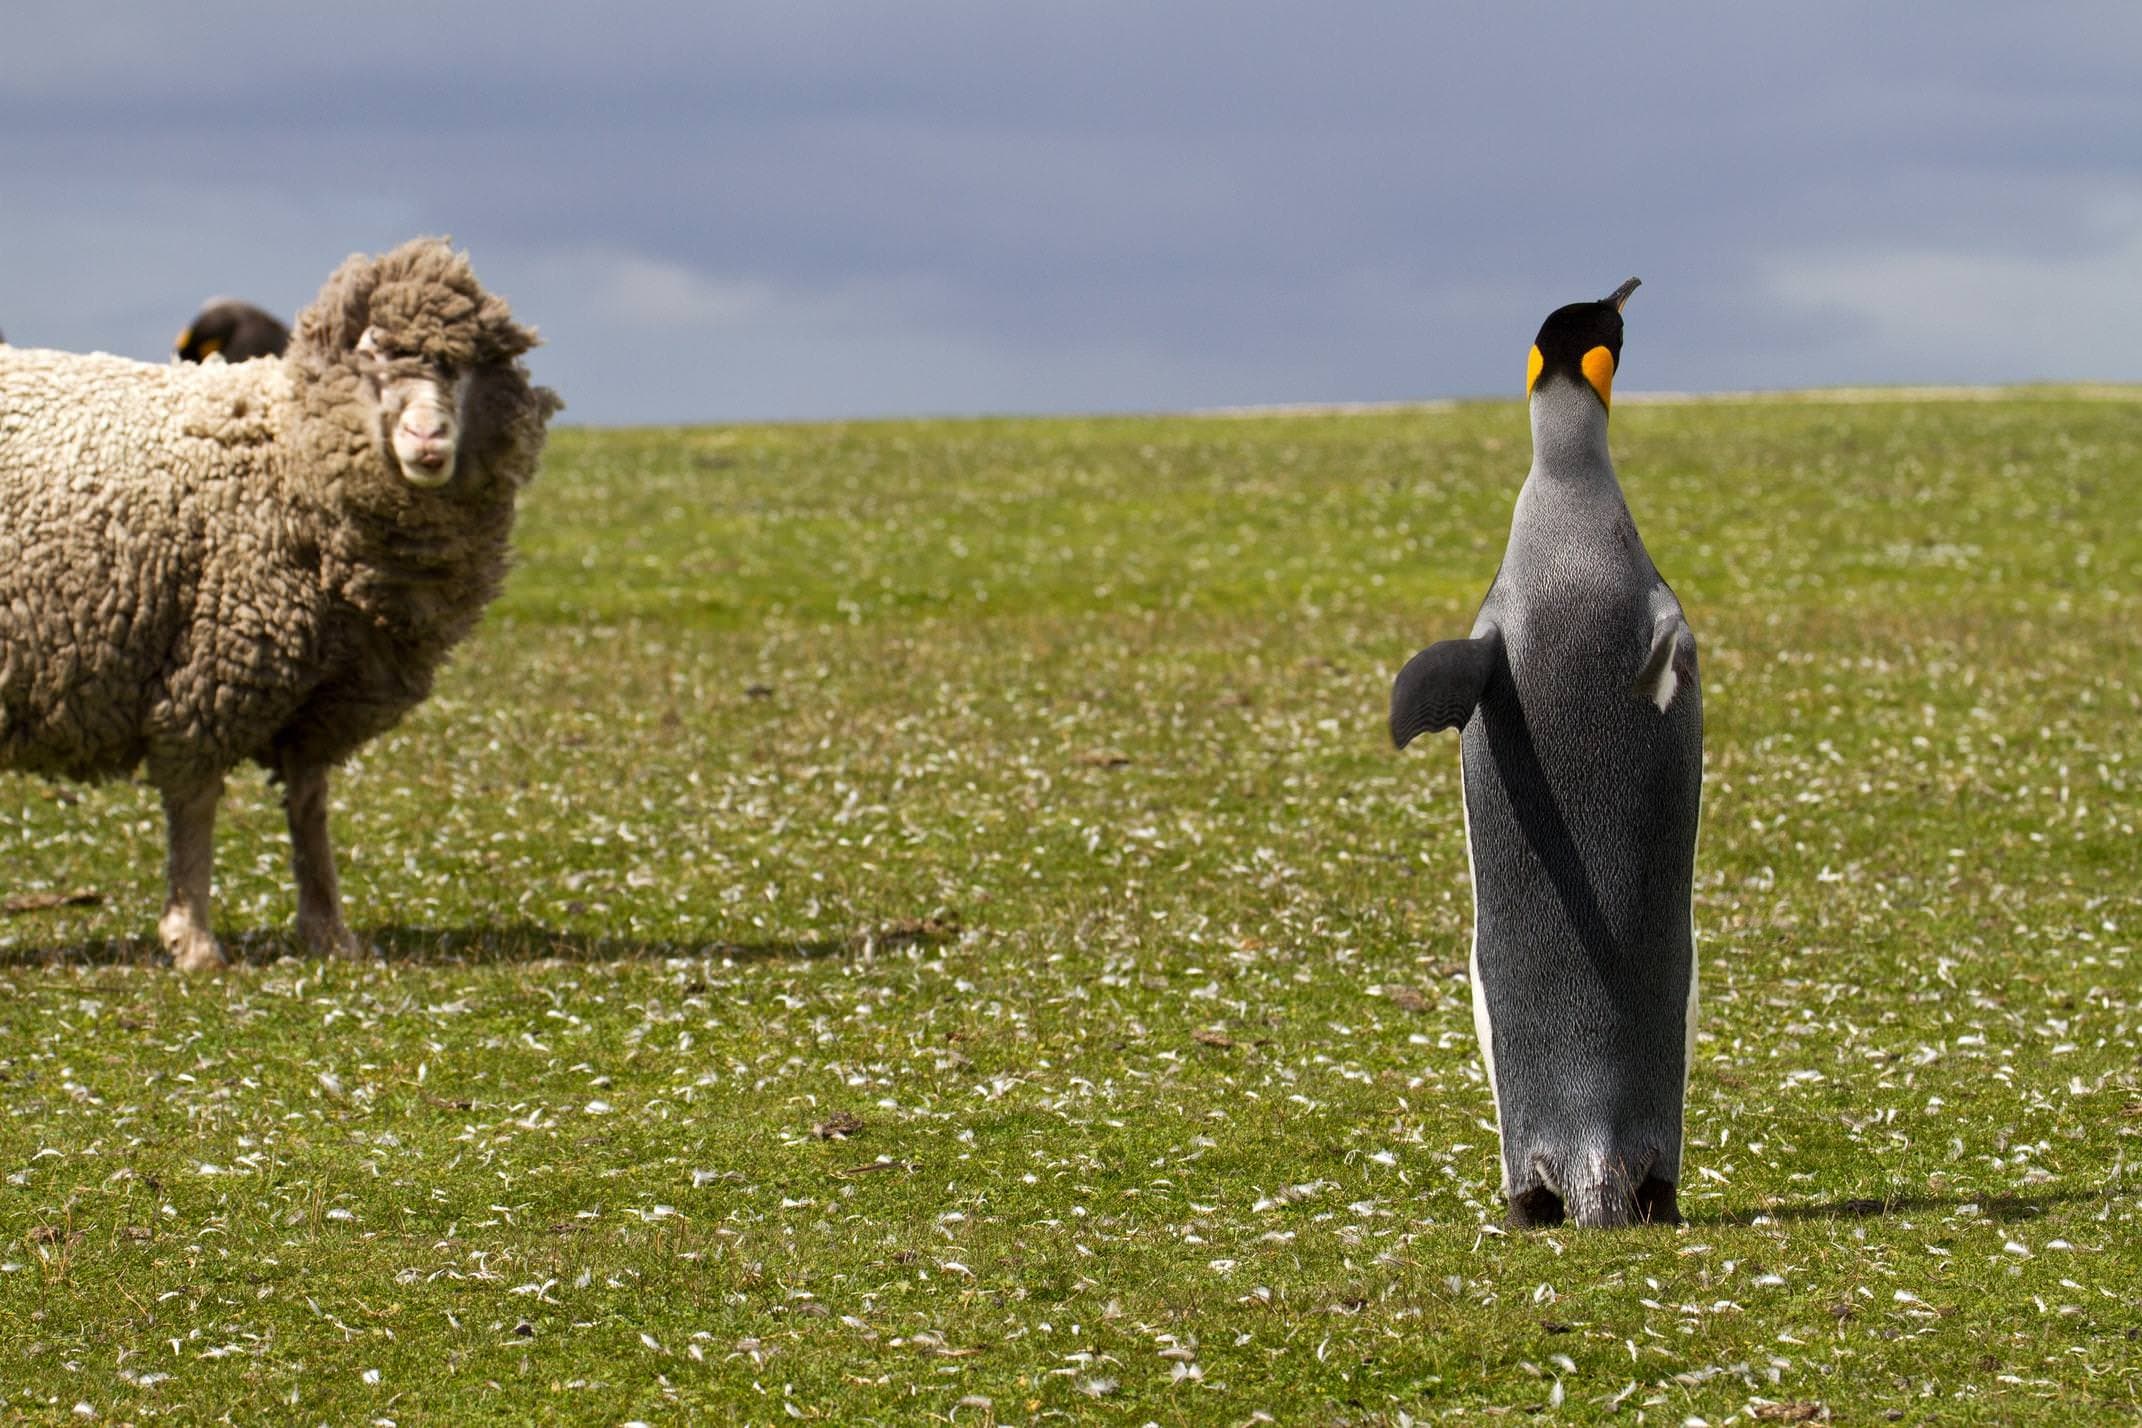 Antarctica southern oceans falklands islands king penguin and sheep c manfred thuerig